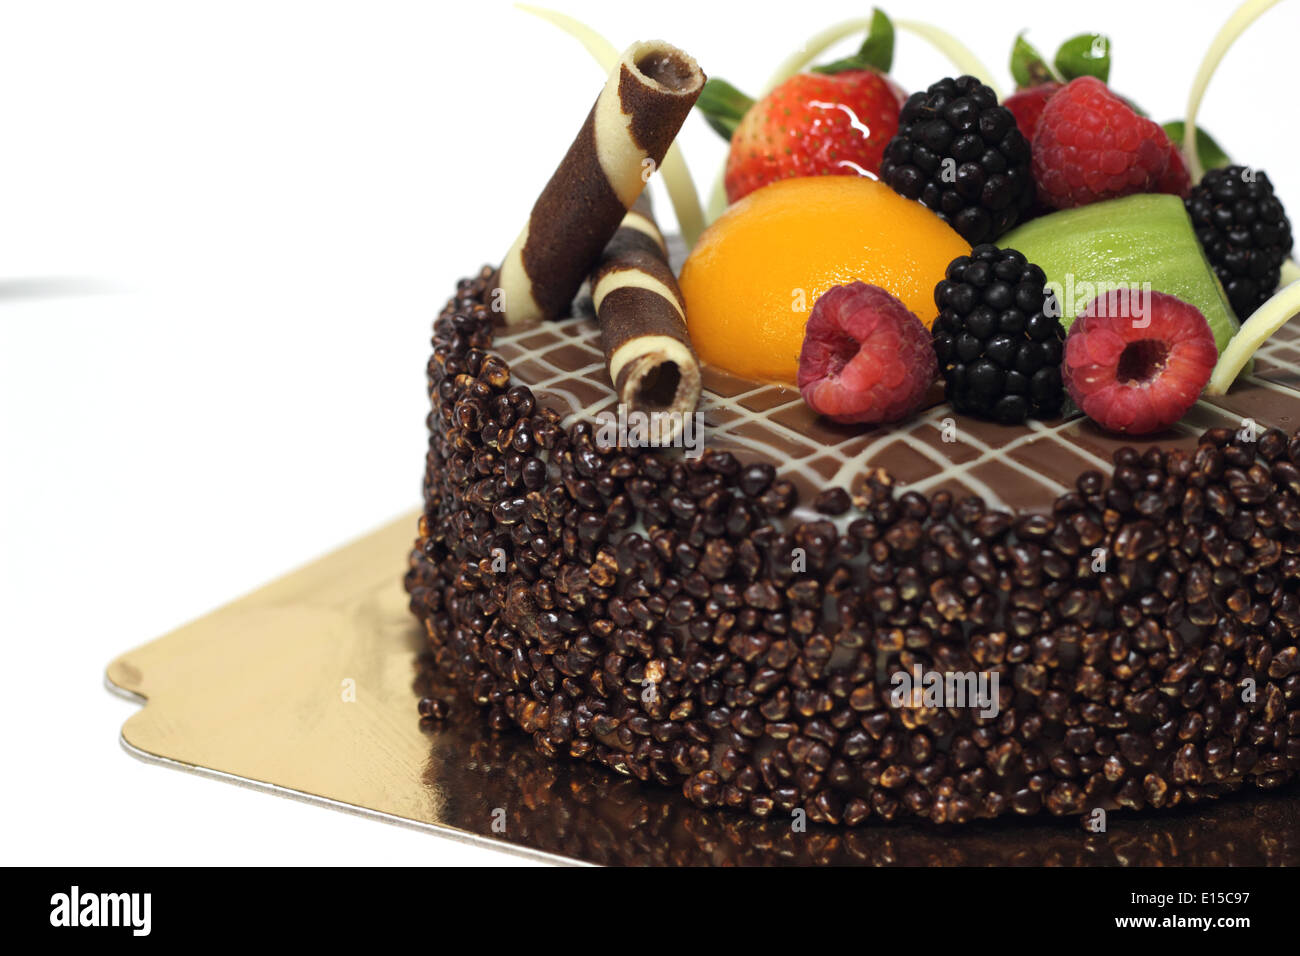 Delicious chocolate strawberry cake with chocolate ganache. Stock Photo